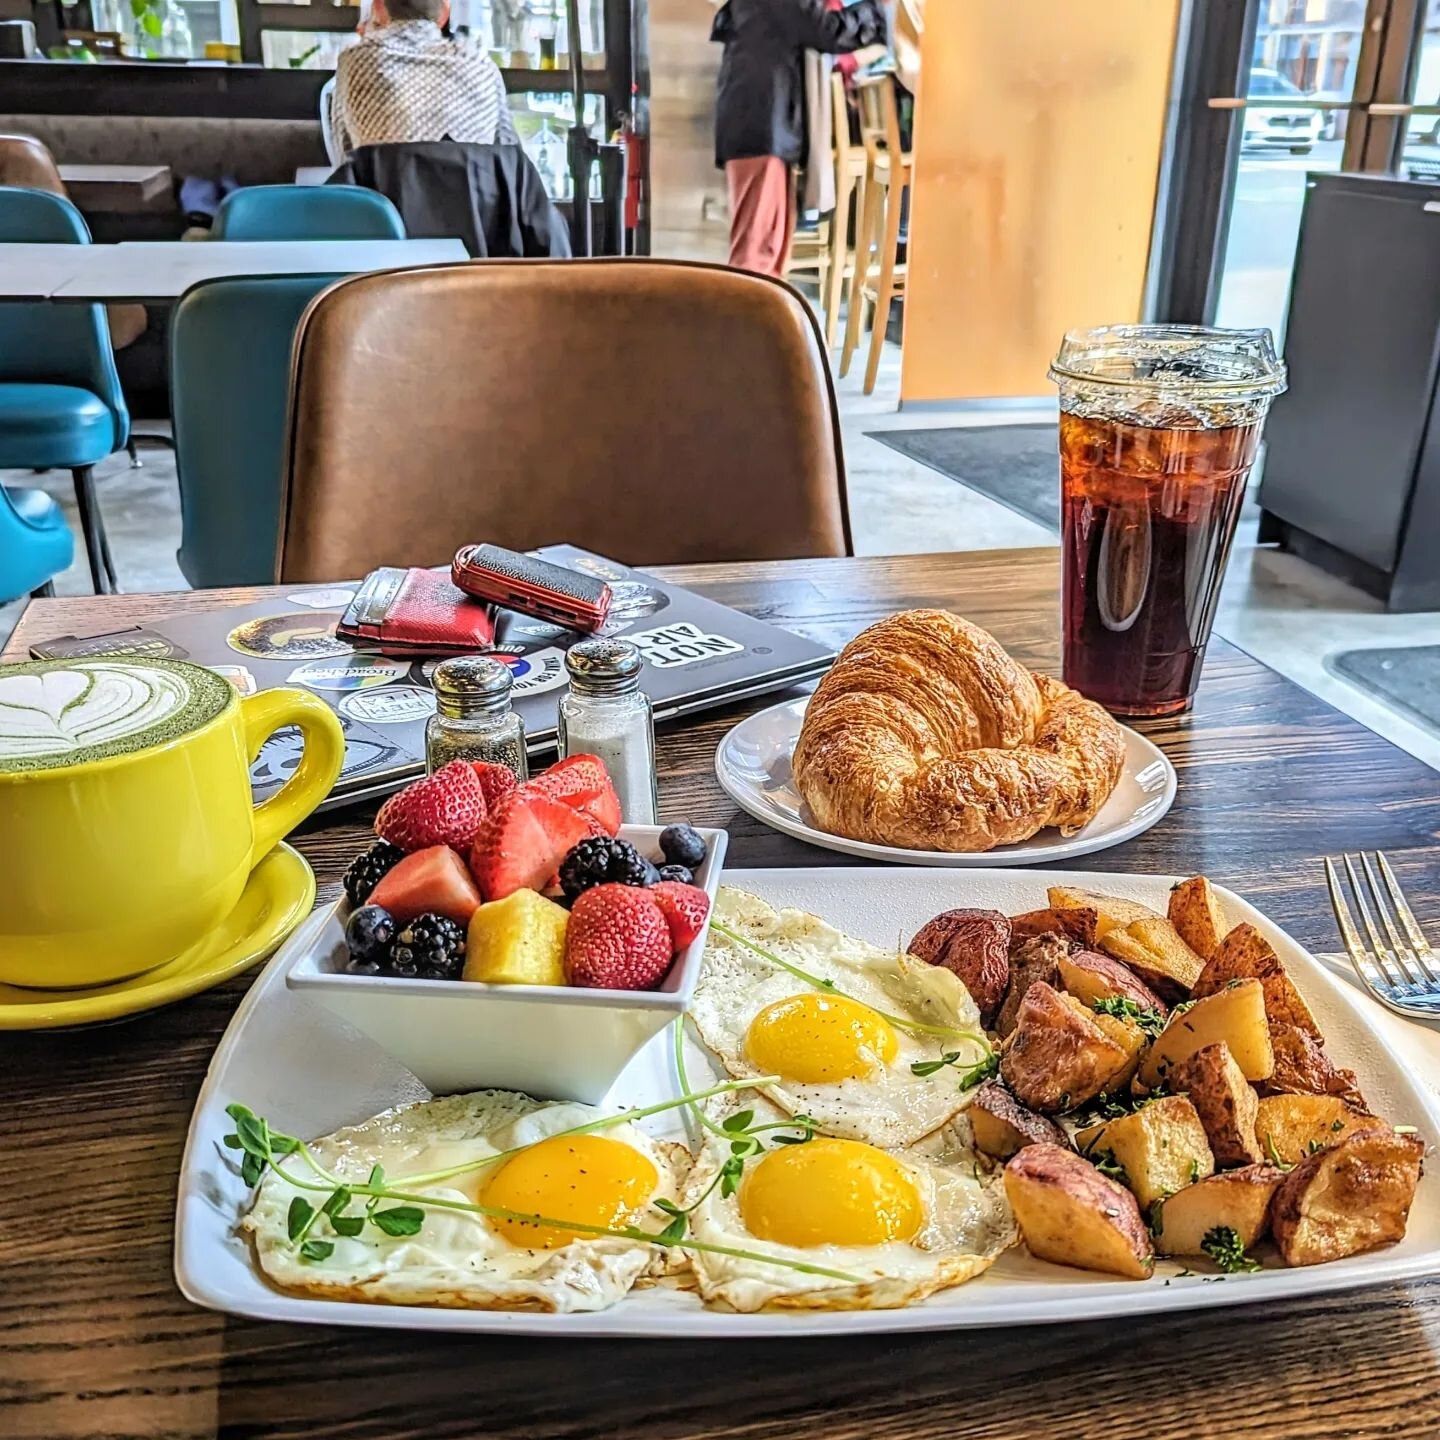 Sometimes you just want a classic breakfast.. executed perfectly.

Thanks Chef 😄

#lunchbreak #breakfasting #brunchtime #breakfastofchampions # nodiets #brunching #brunchaholics #bostonfoodies #bostonma #bostonsofinstagram #breakfasttime☕️ #bostonst